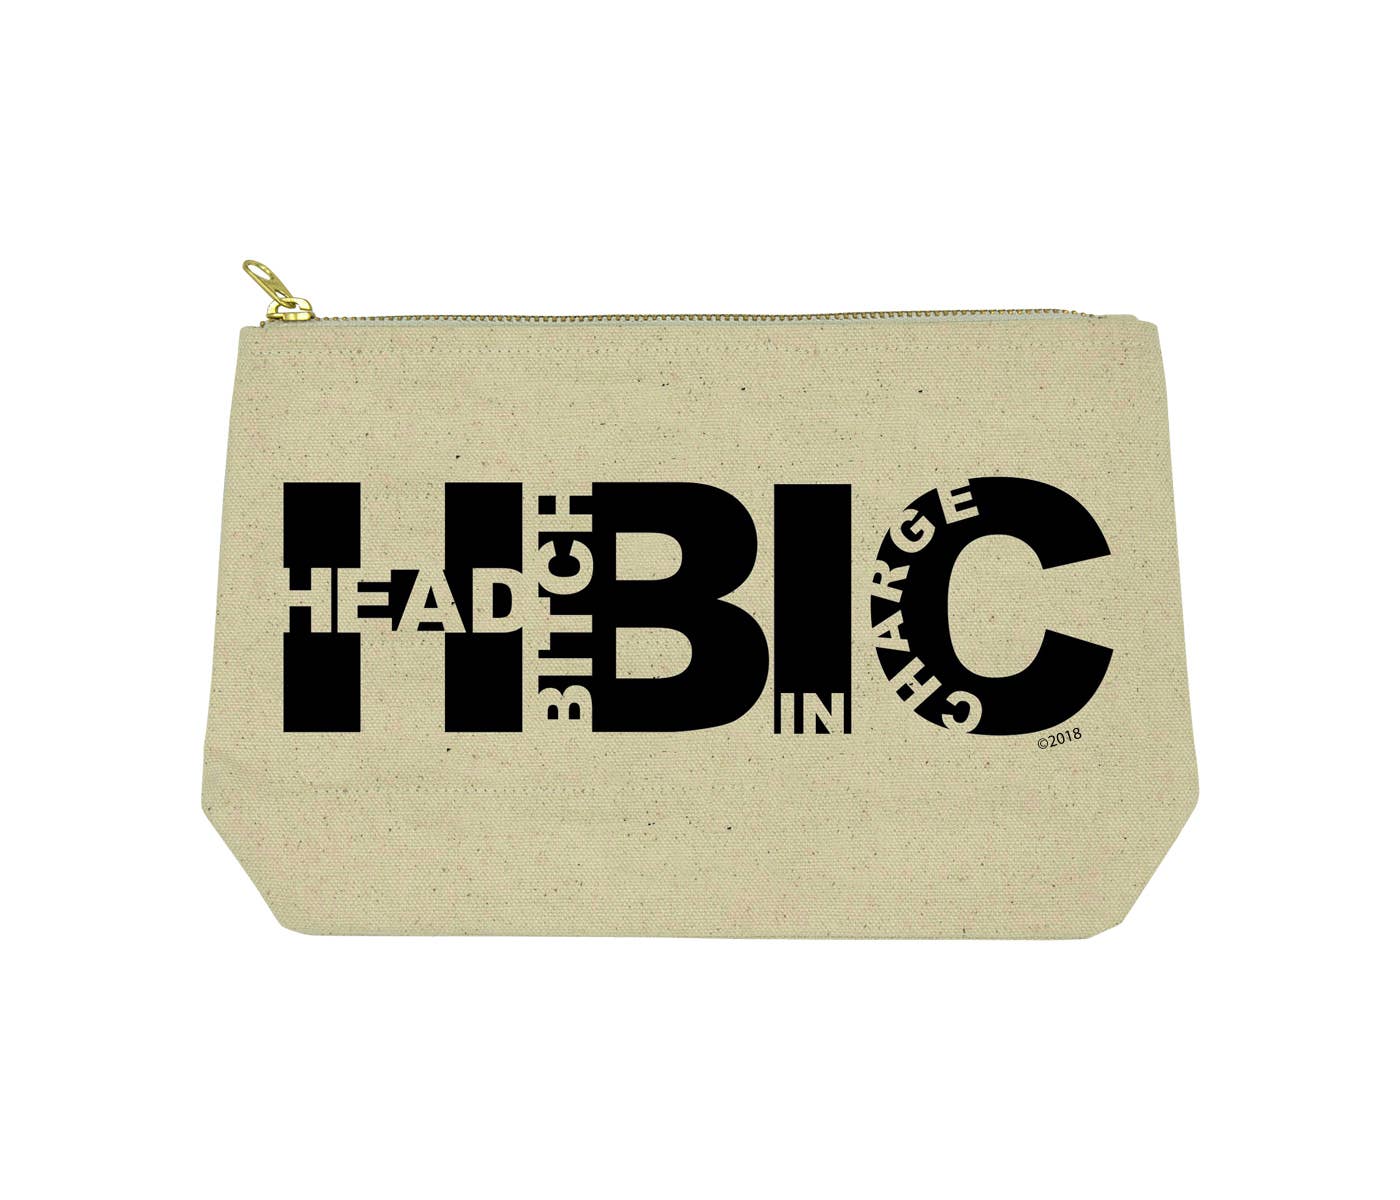 HBIC BAG